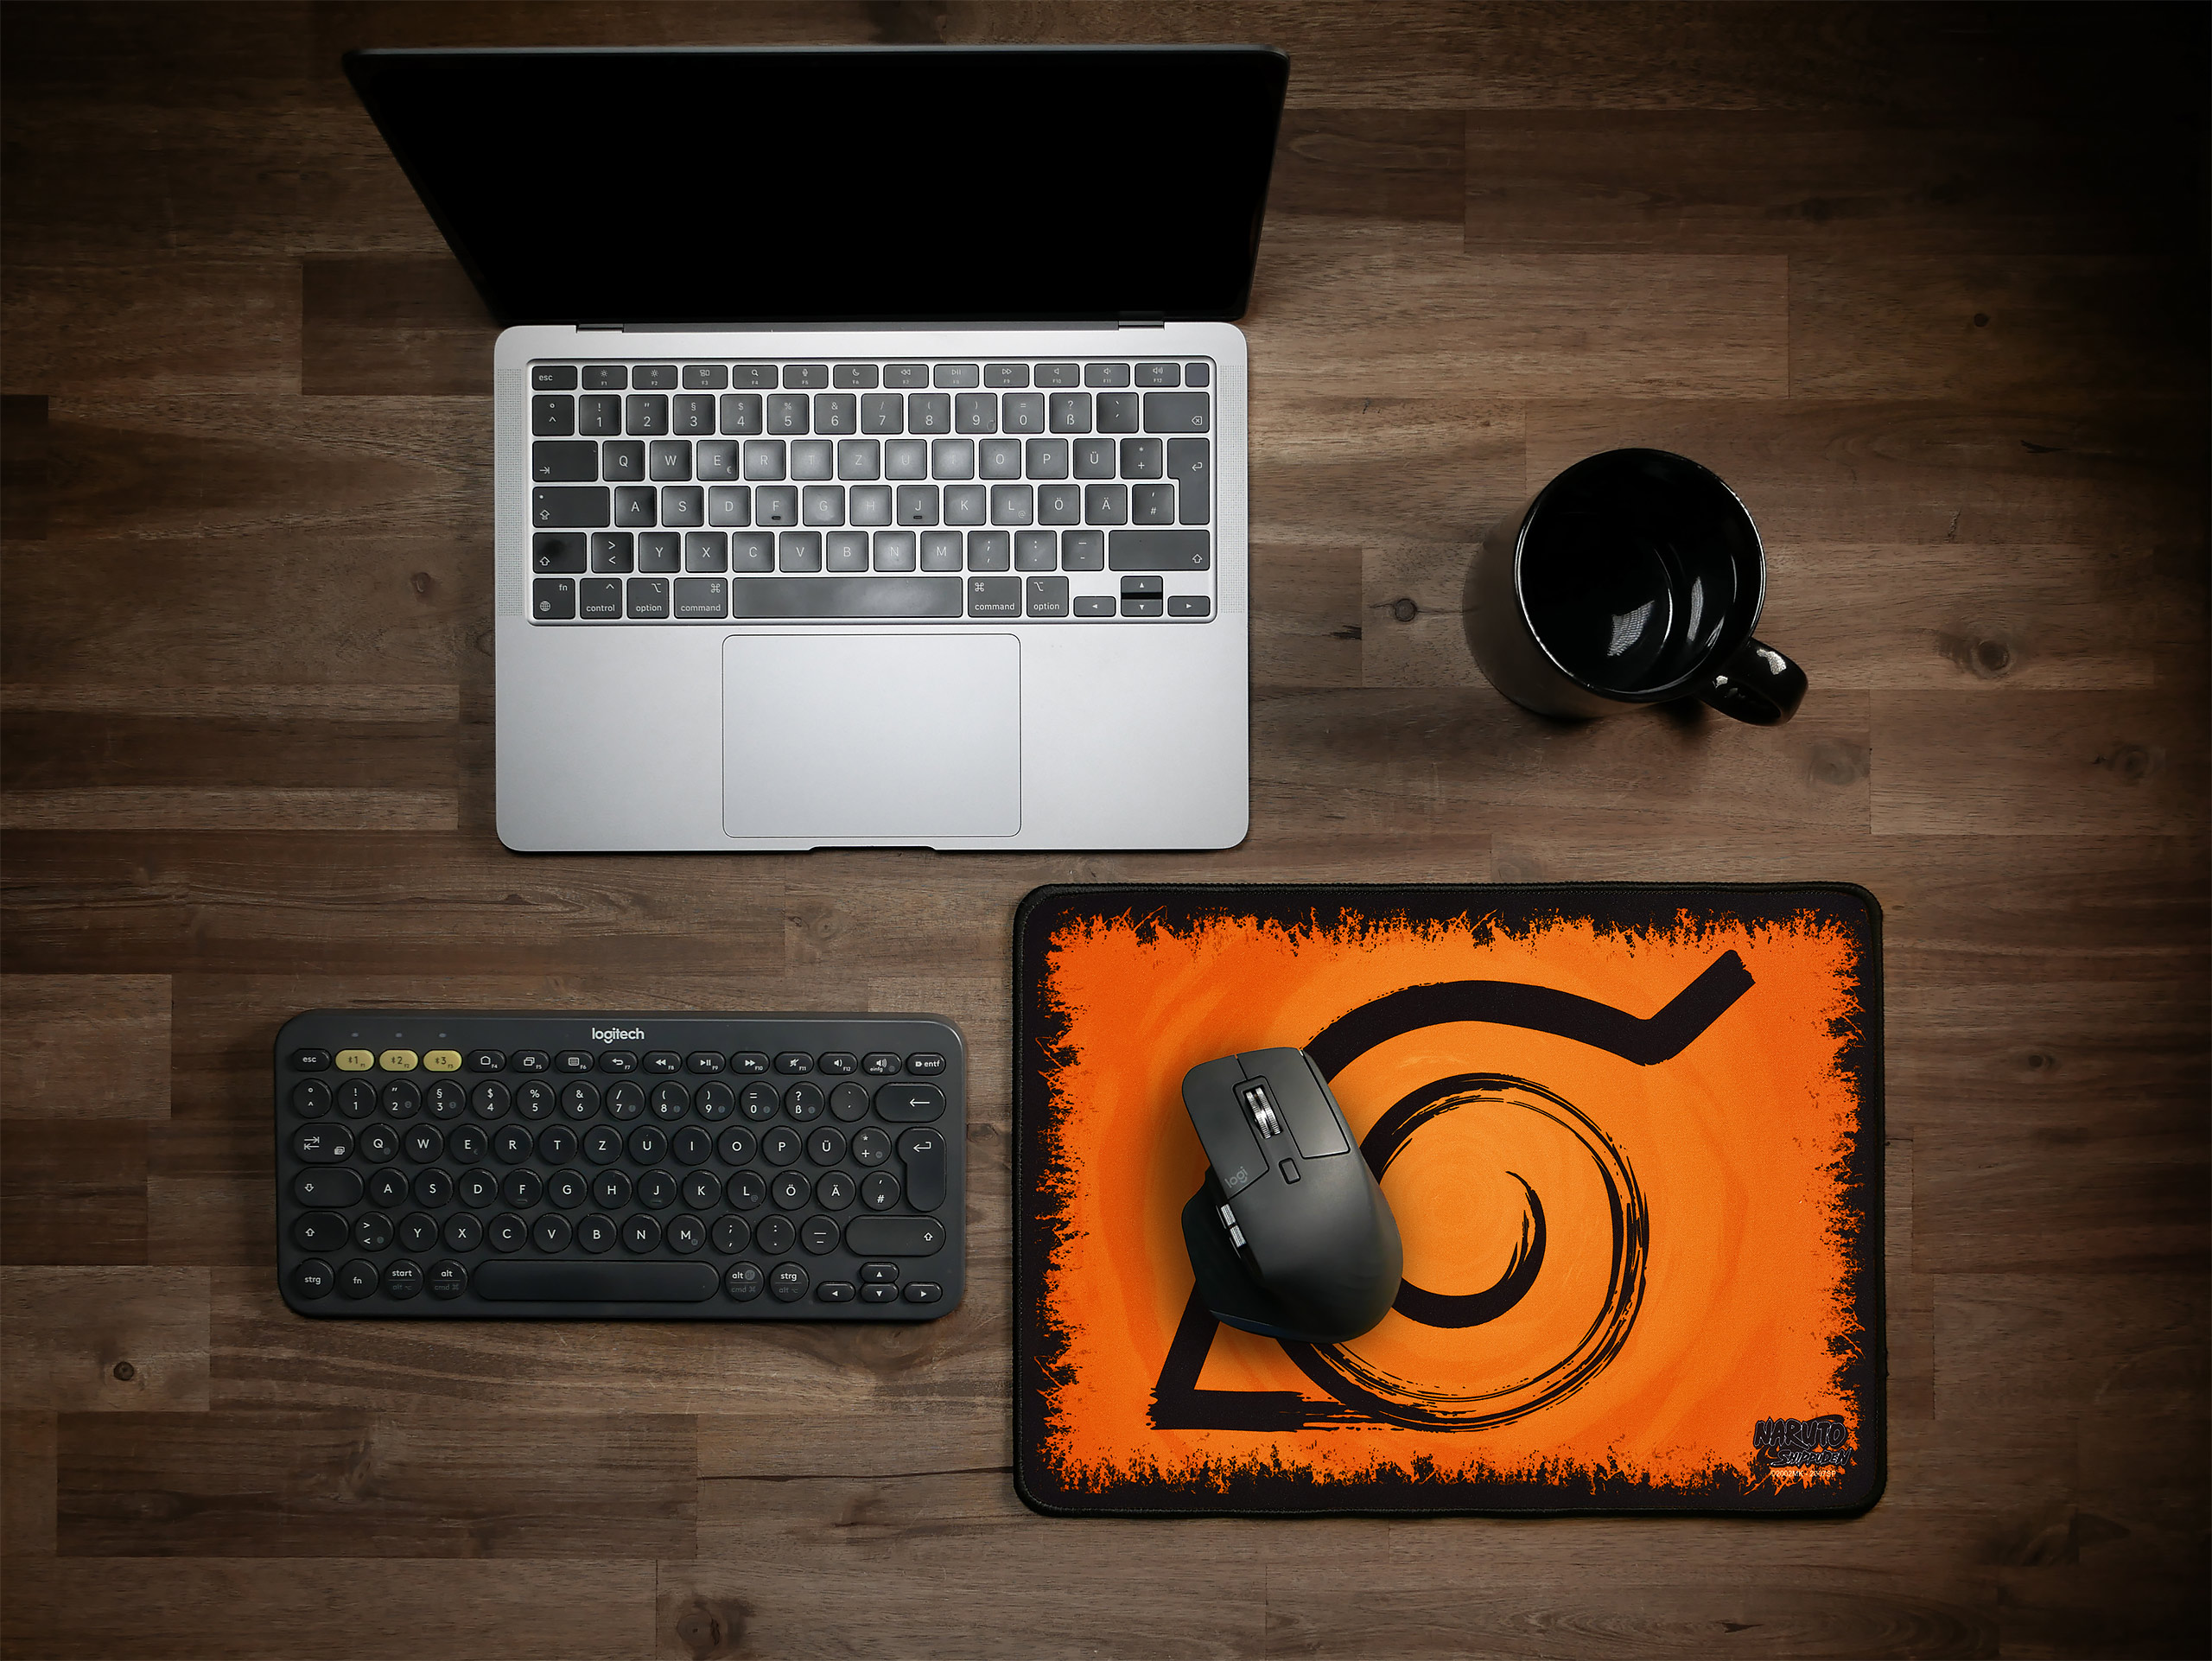 Naruto Shippuden - Konoha Symbol Gaming Mousepad